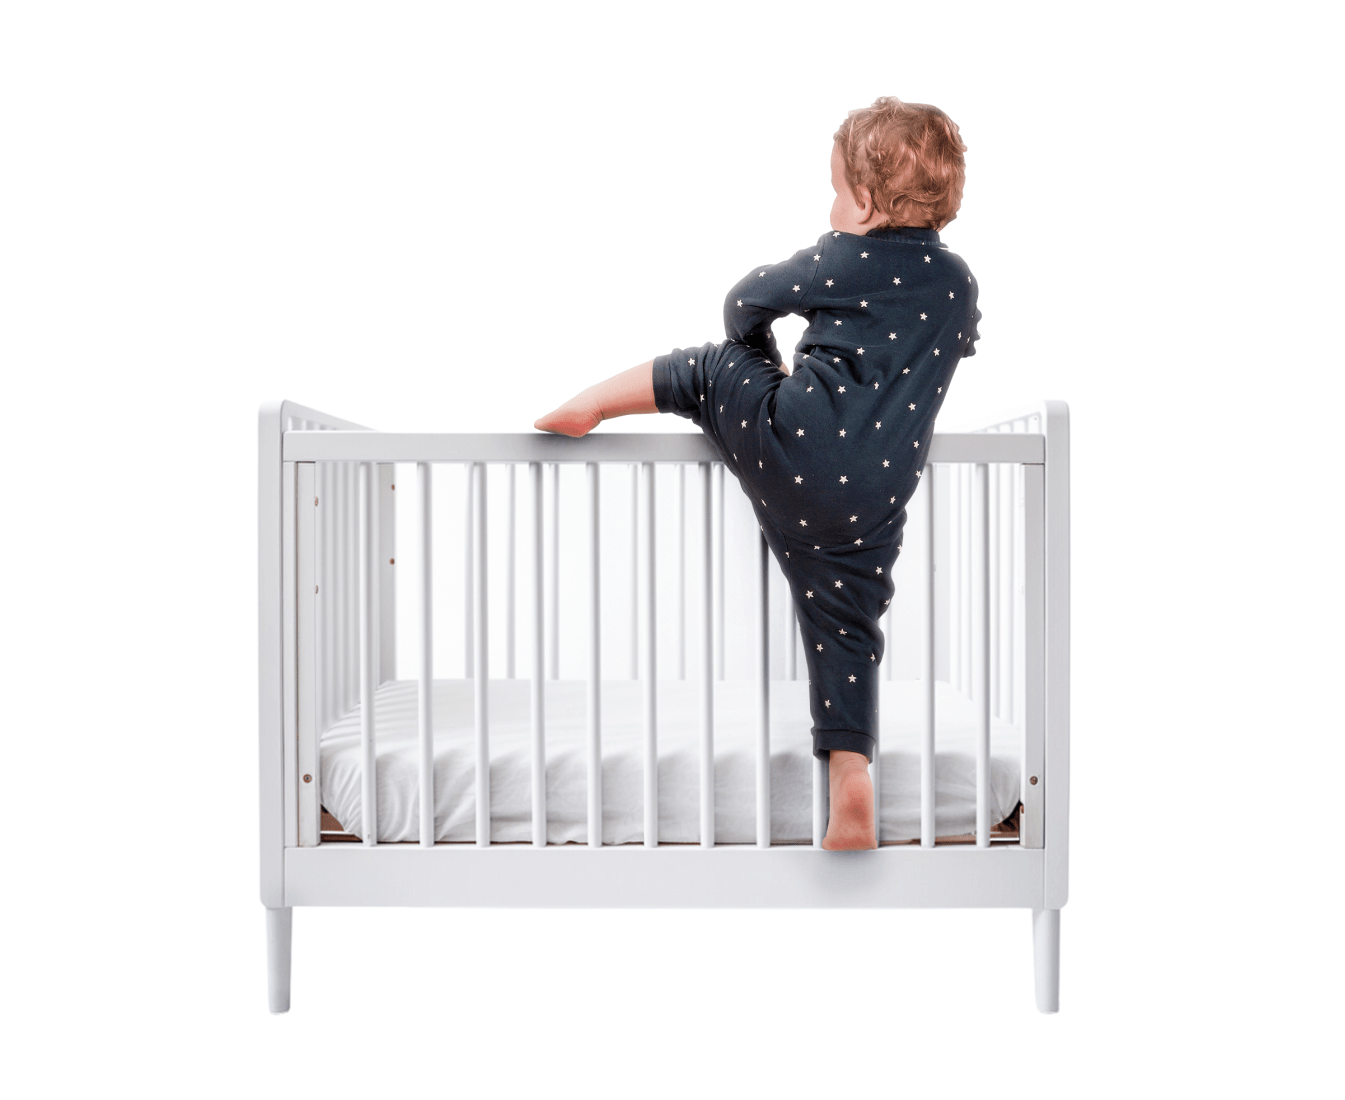 Toddler climbing out of crib | Batelle